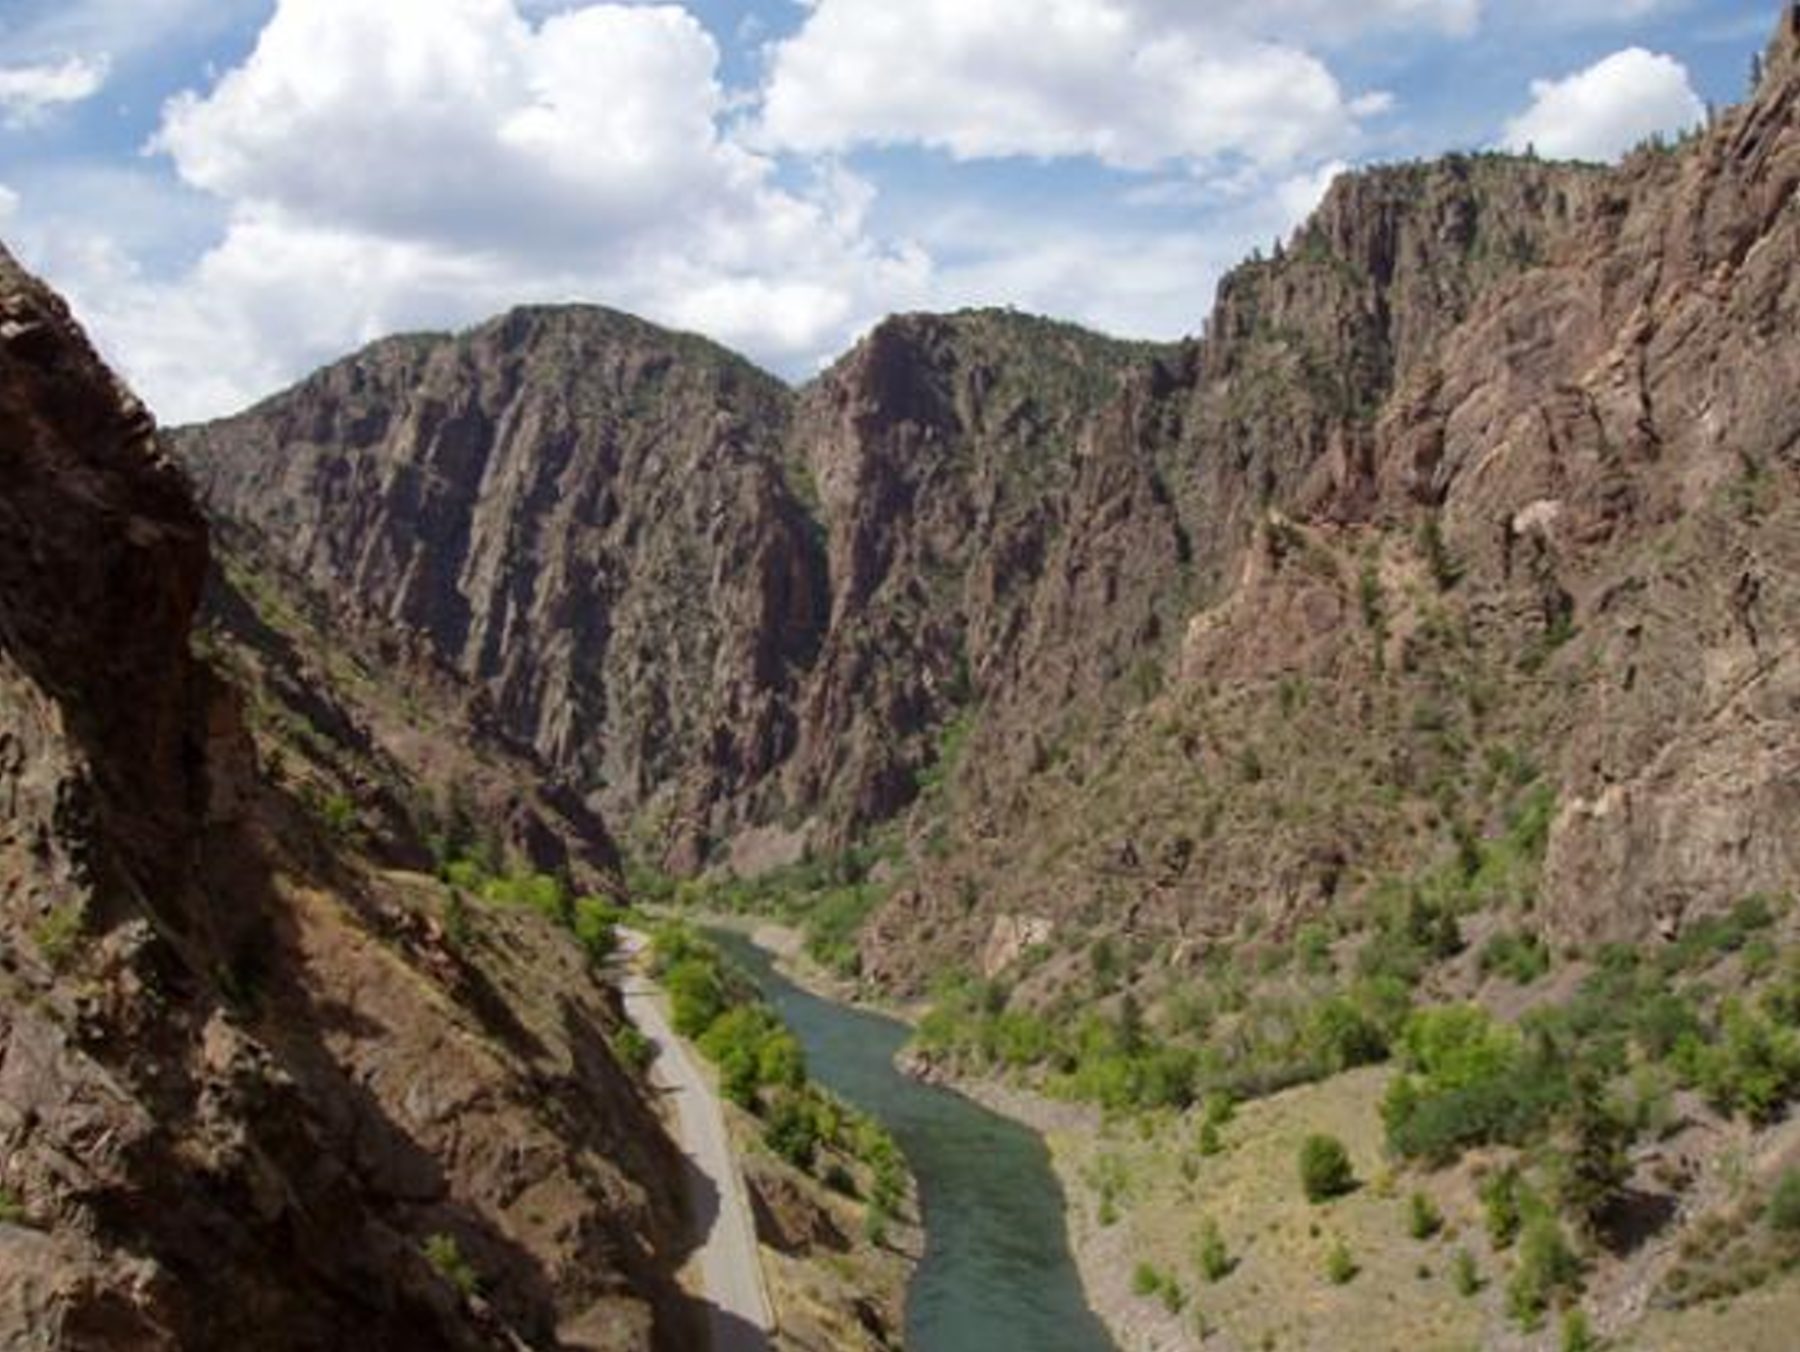 Scene from the Upper Colorado River Basin